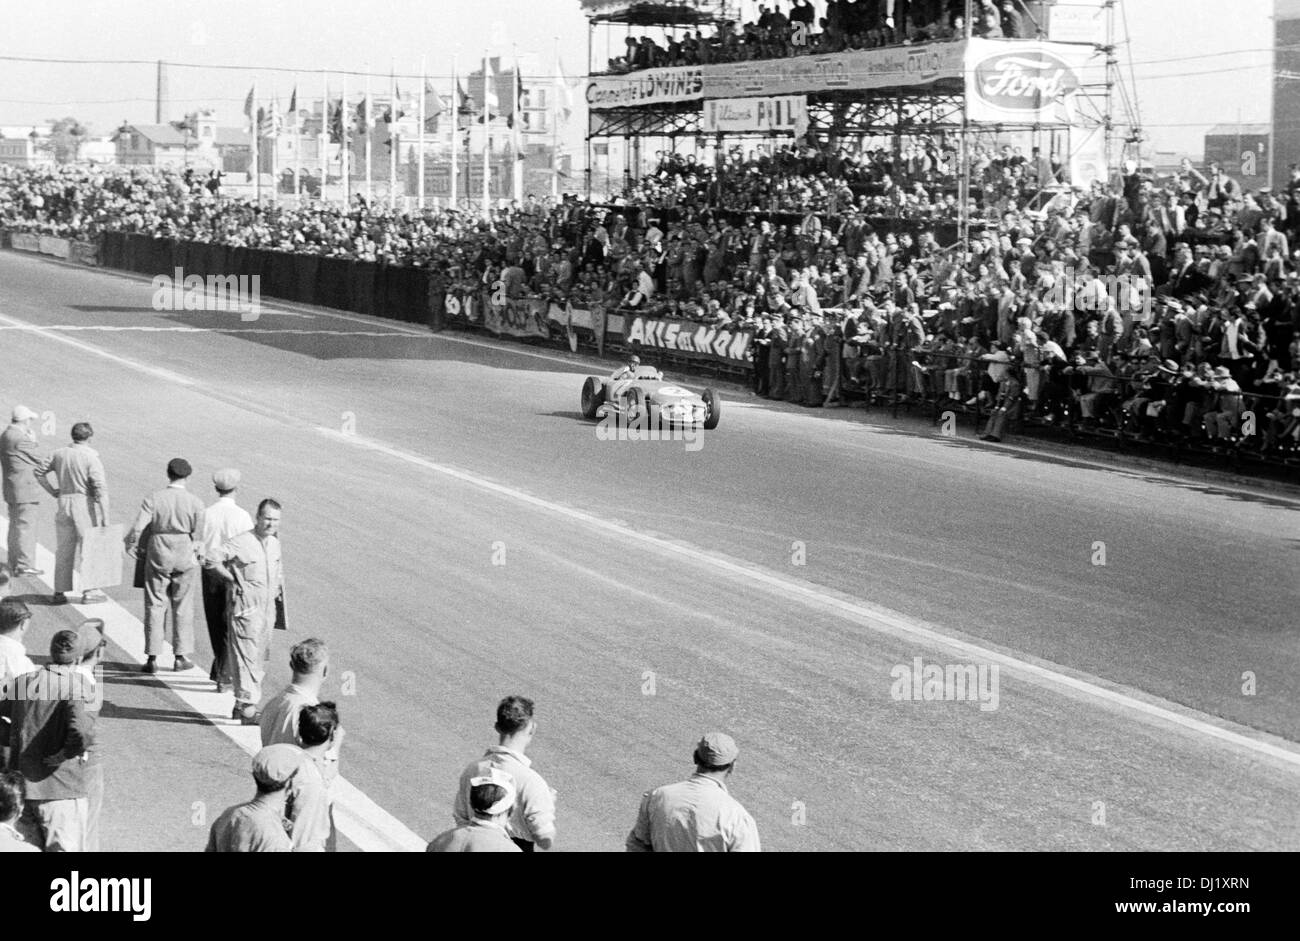 Juan Manuel Fangio's Mercedes-Benz W196 at the Spanish Grand Prix, Pedralbes, Spain 24 Oct 1954. Stock Photo